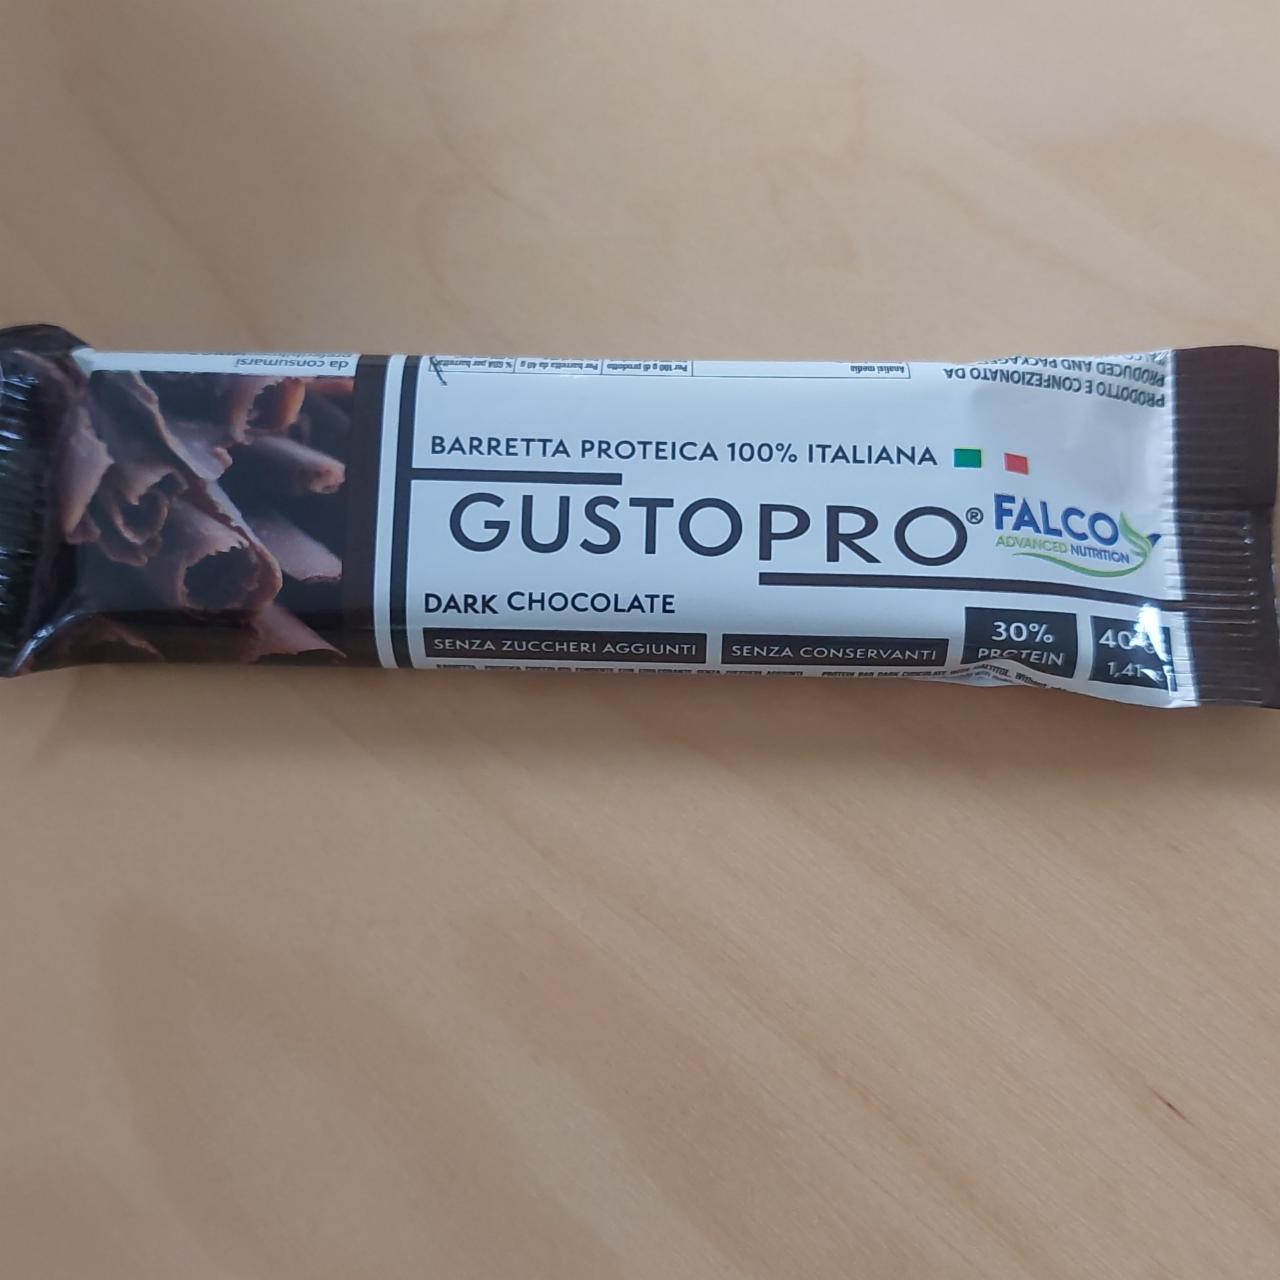 Fotografie - Gusto Pro Hořká čokoláda Falco